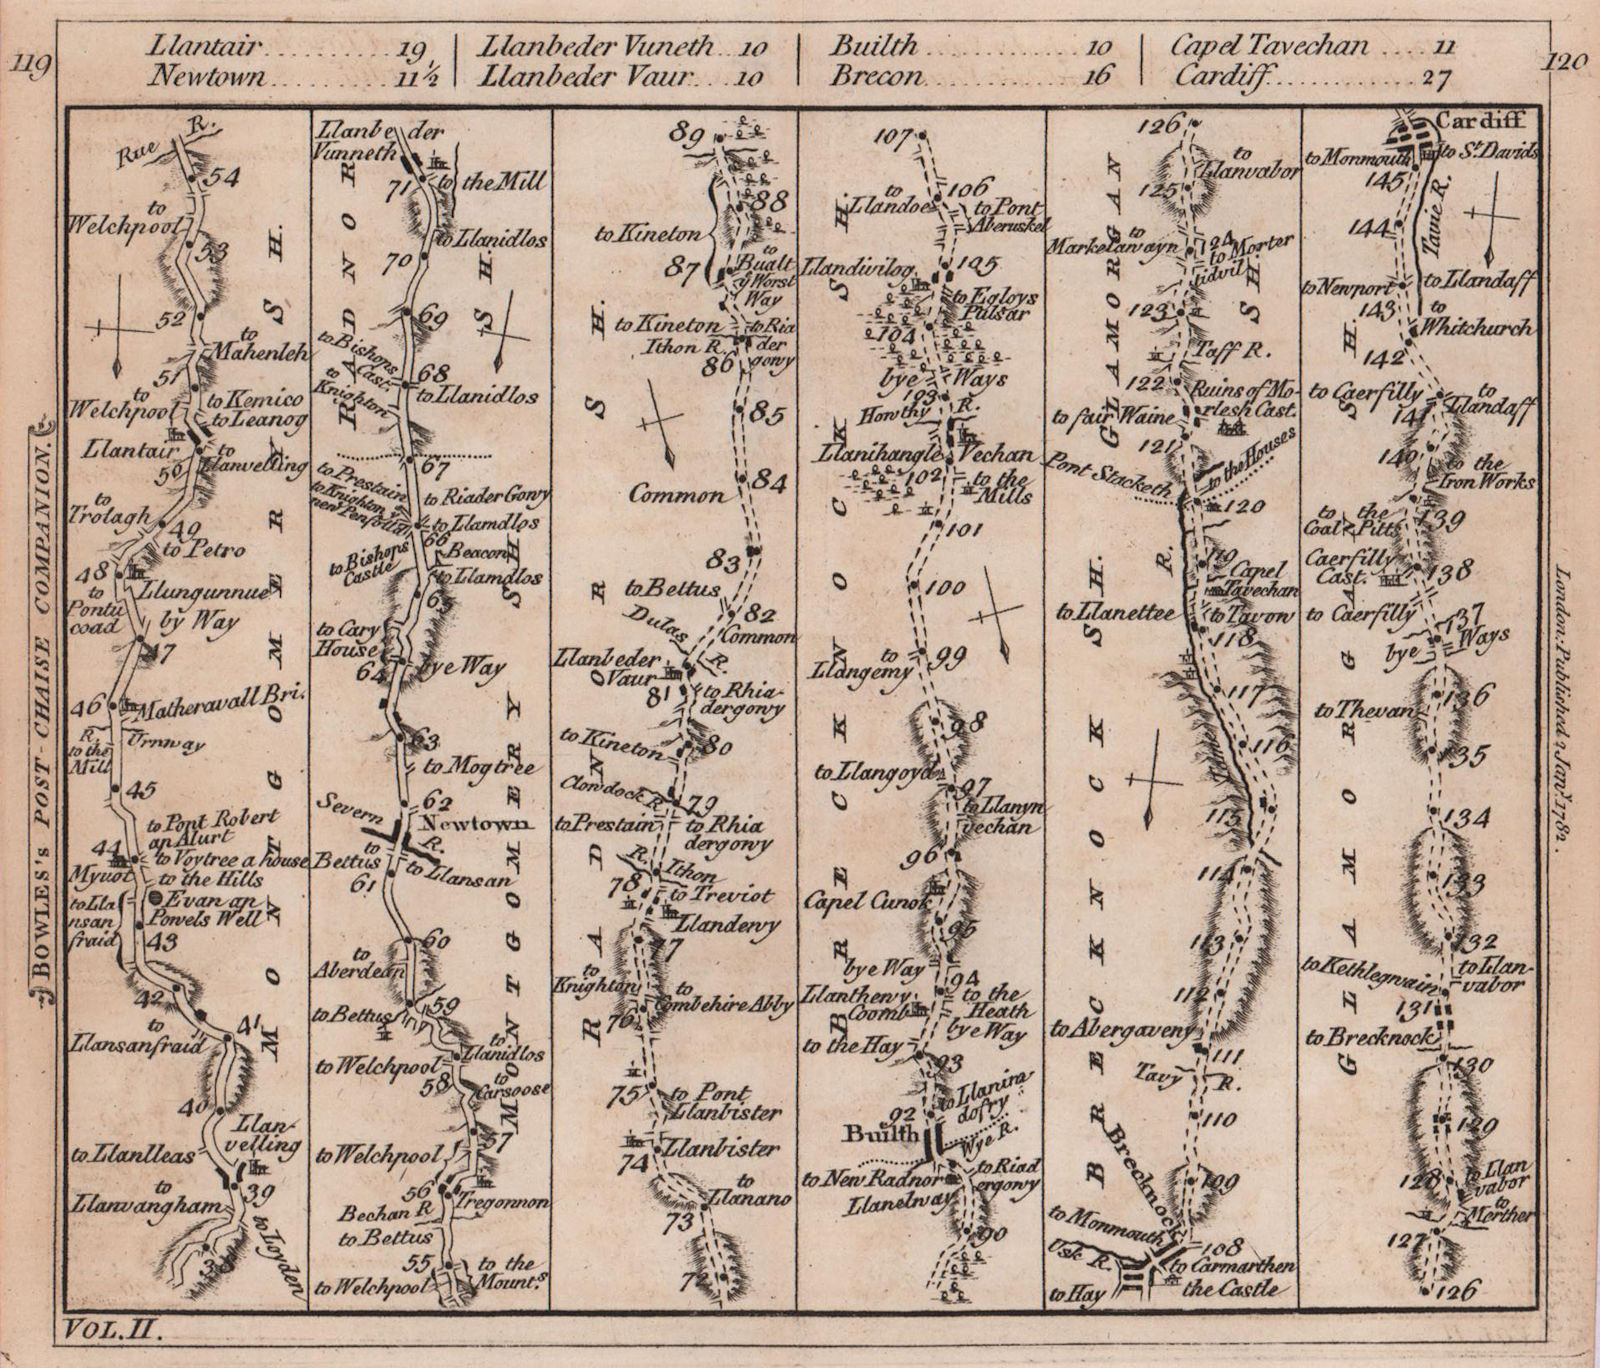 Llanfair-Newtown-Builth Wells-Brecon-Cardiff road strip map. BOWLES 1782